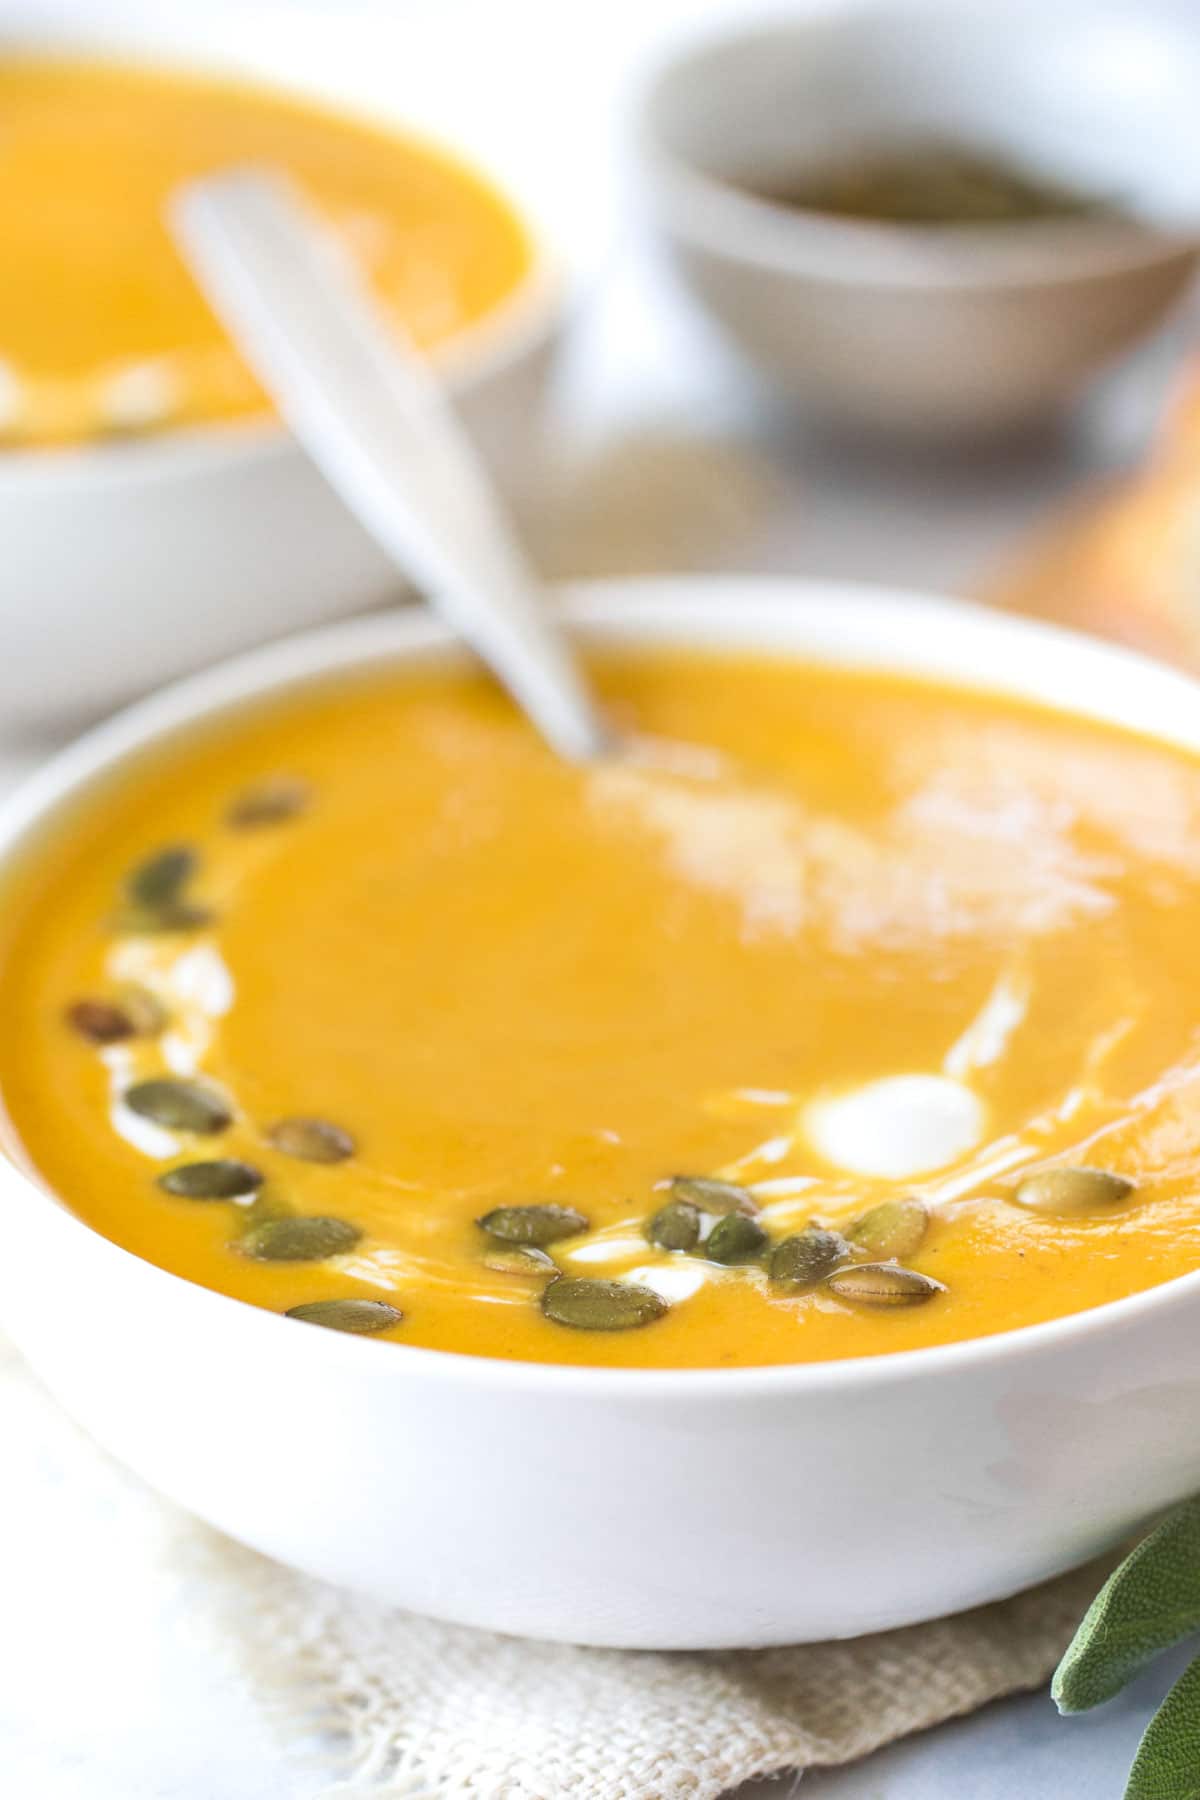 Autumn Sqaush Soup | Dairy free squash soup, Panera copycat soup, fall soup recipes, creamy soup recipe, squash soup recipe | @simplywhisked